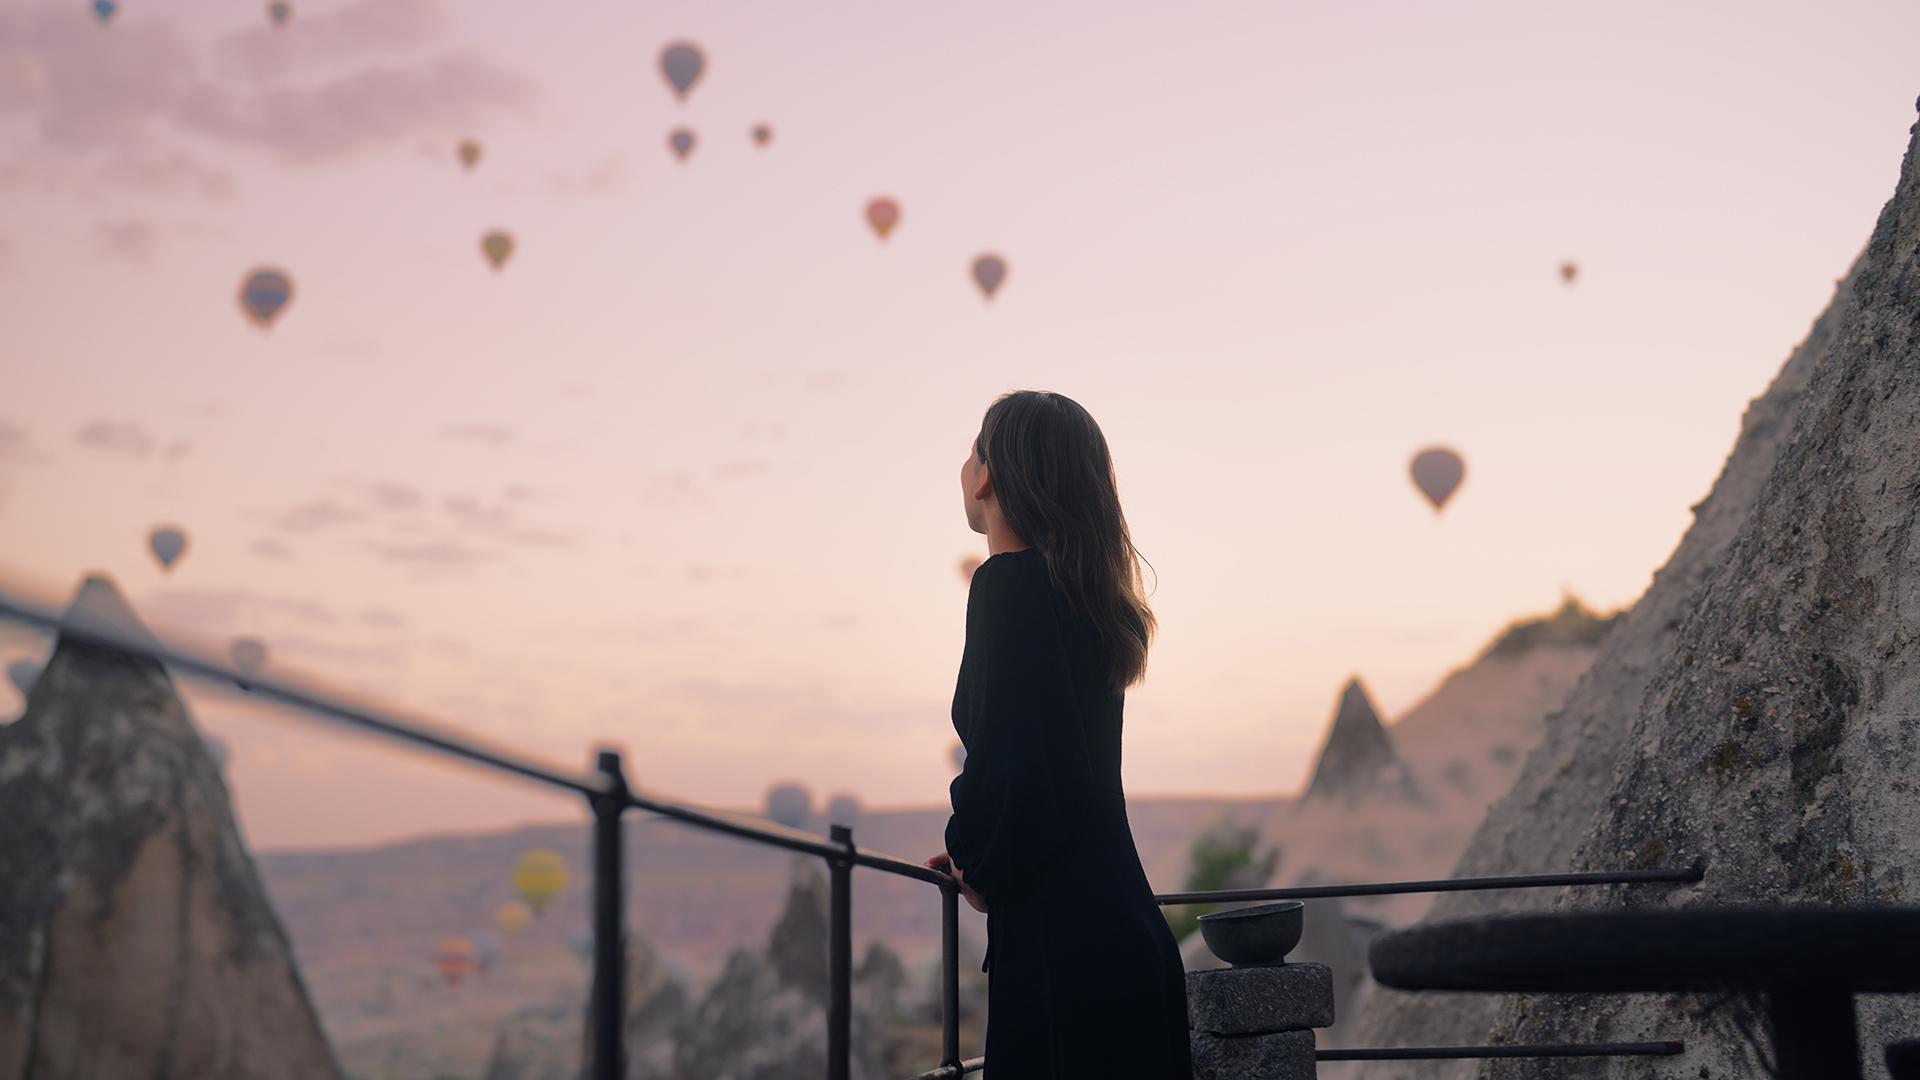 A woman standing on a balcony admiring a hot air balloon festival.